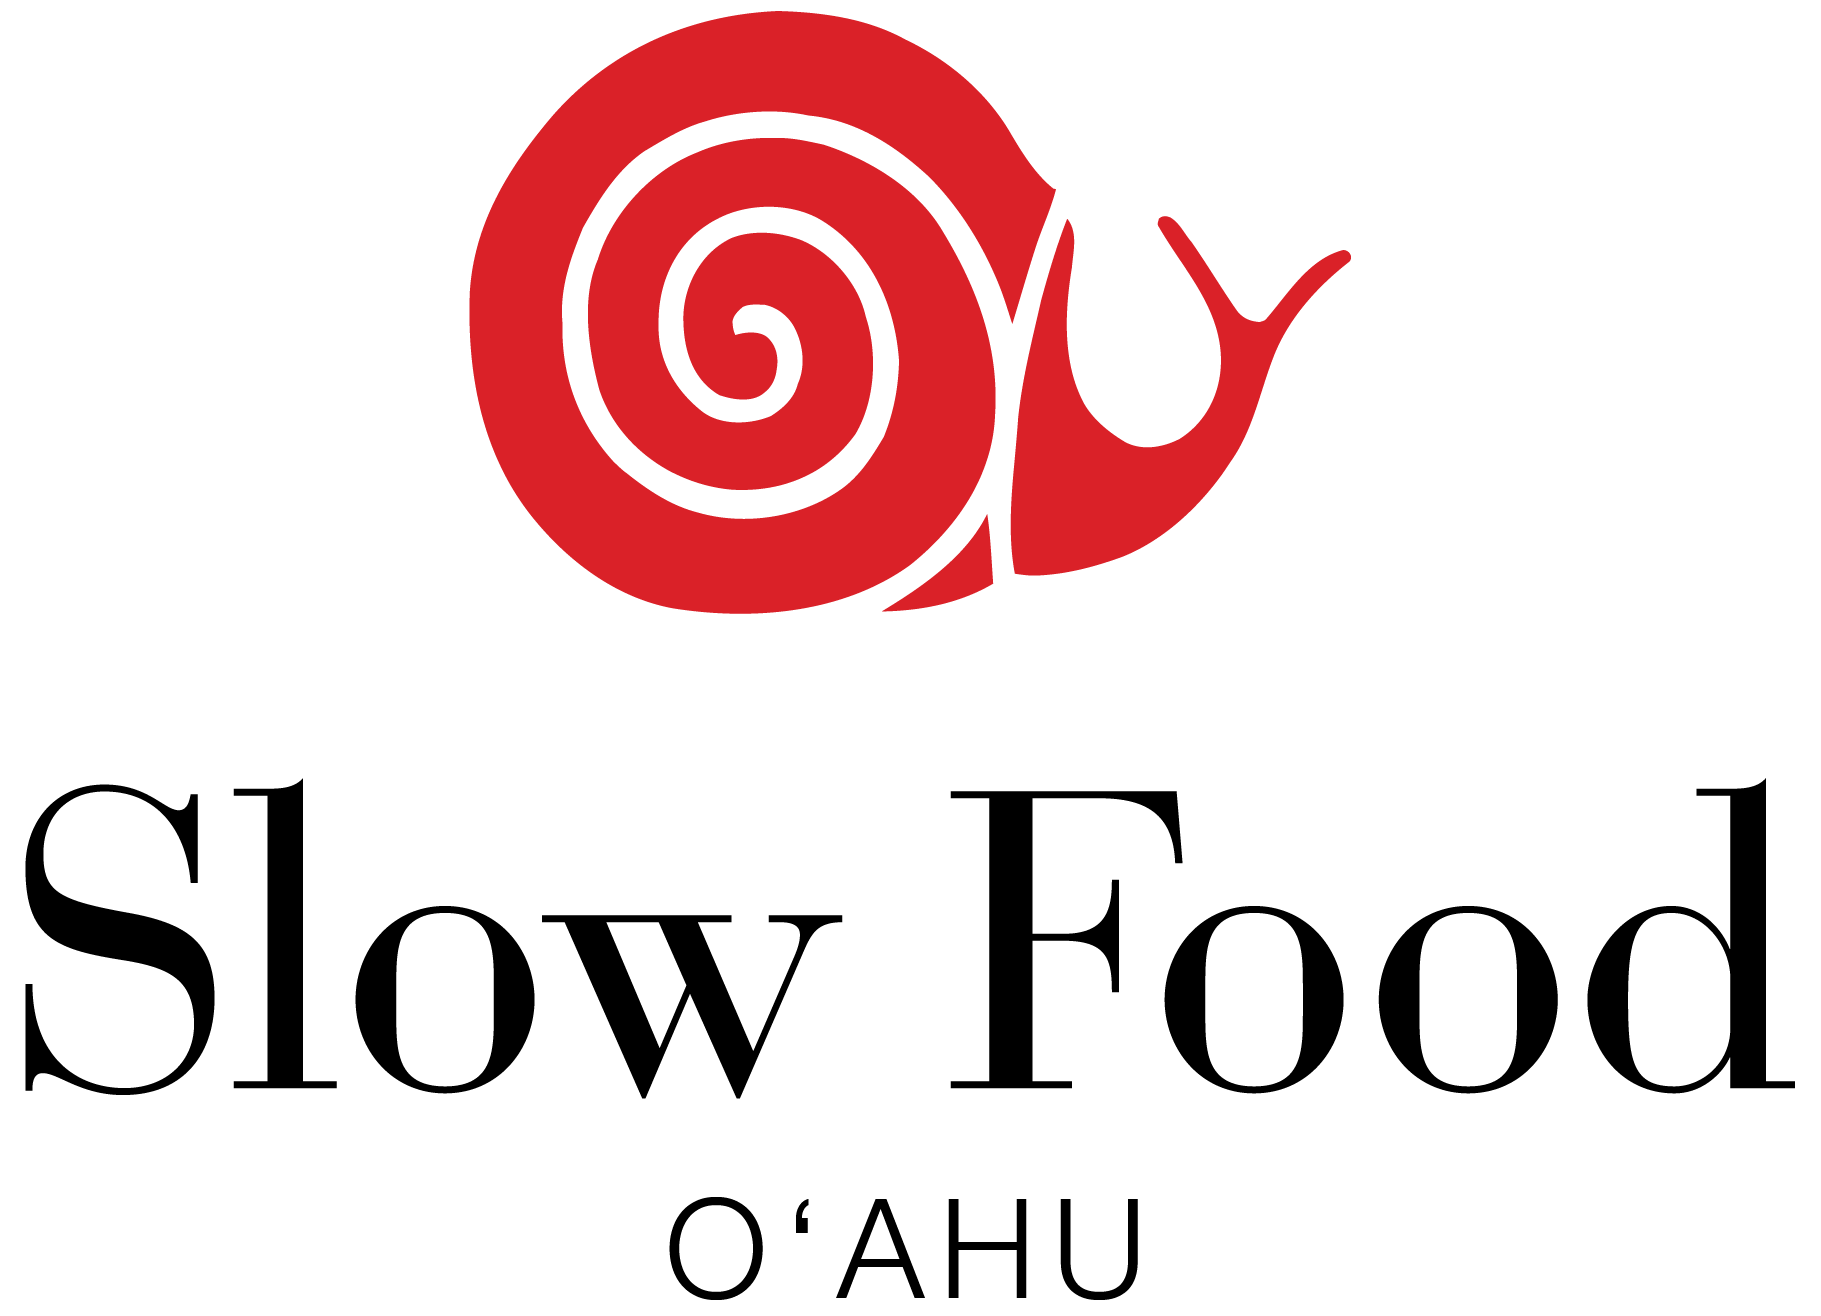 Slow Food Oahu logo